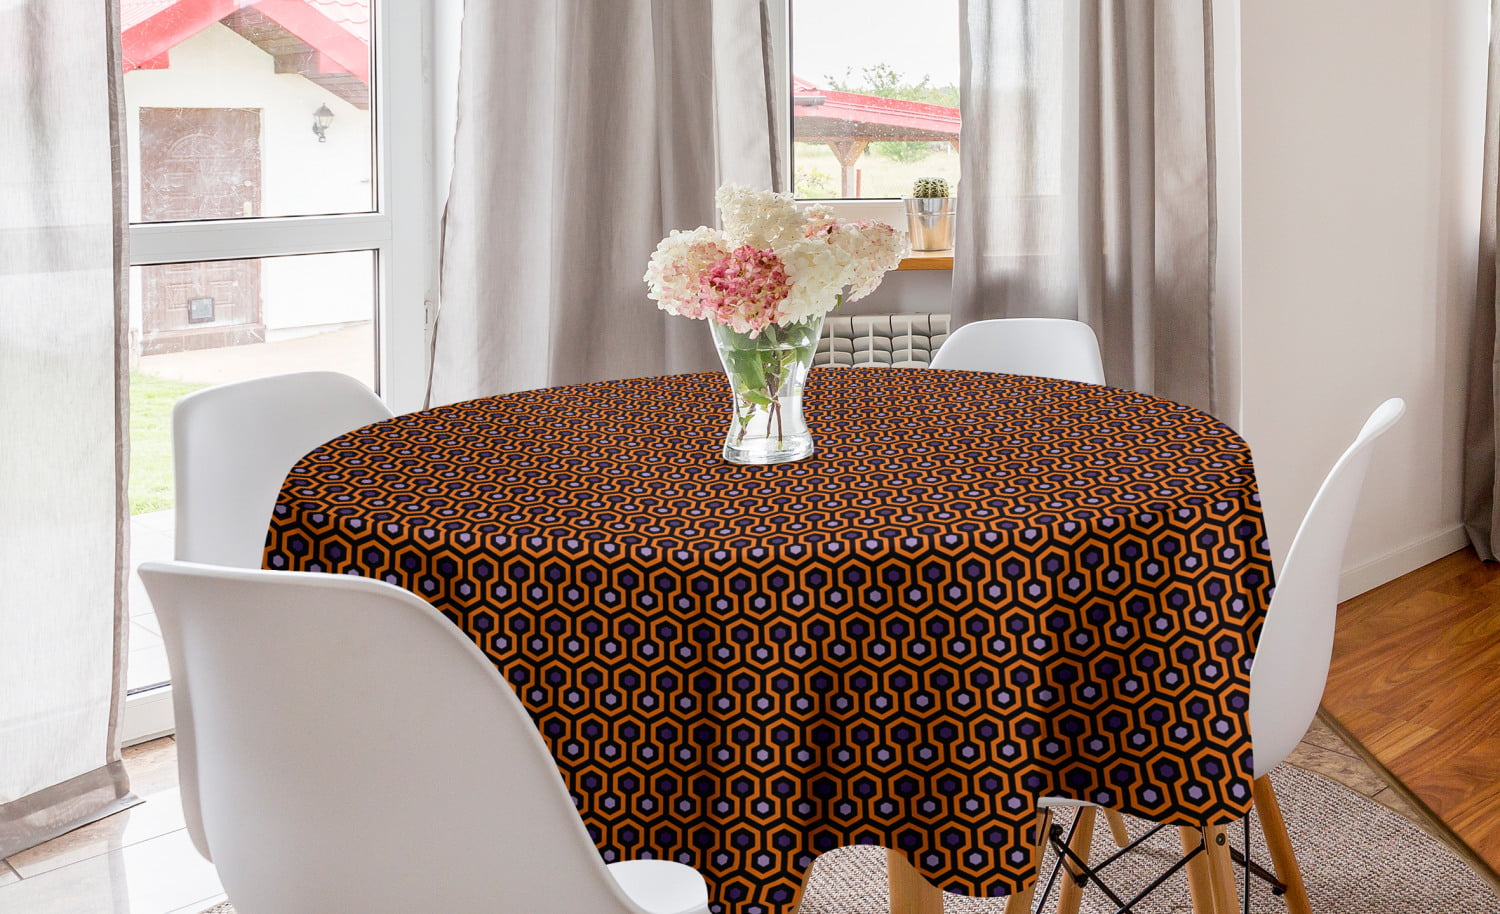 Details about   Tablecloth Dining Kitchen Rectangular Cloths Hotel Restaurants Modern Home Decor 